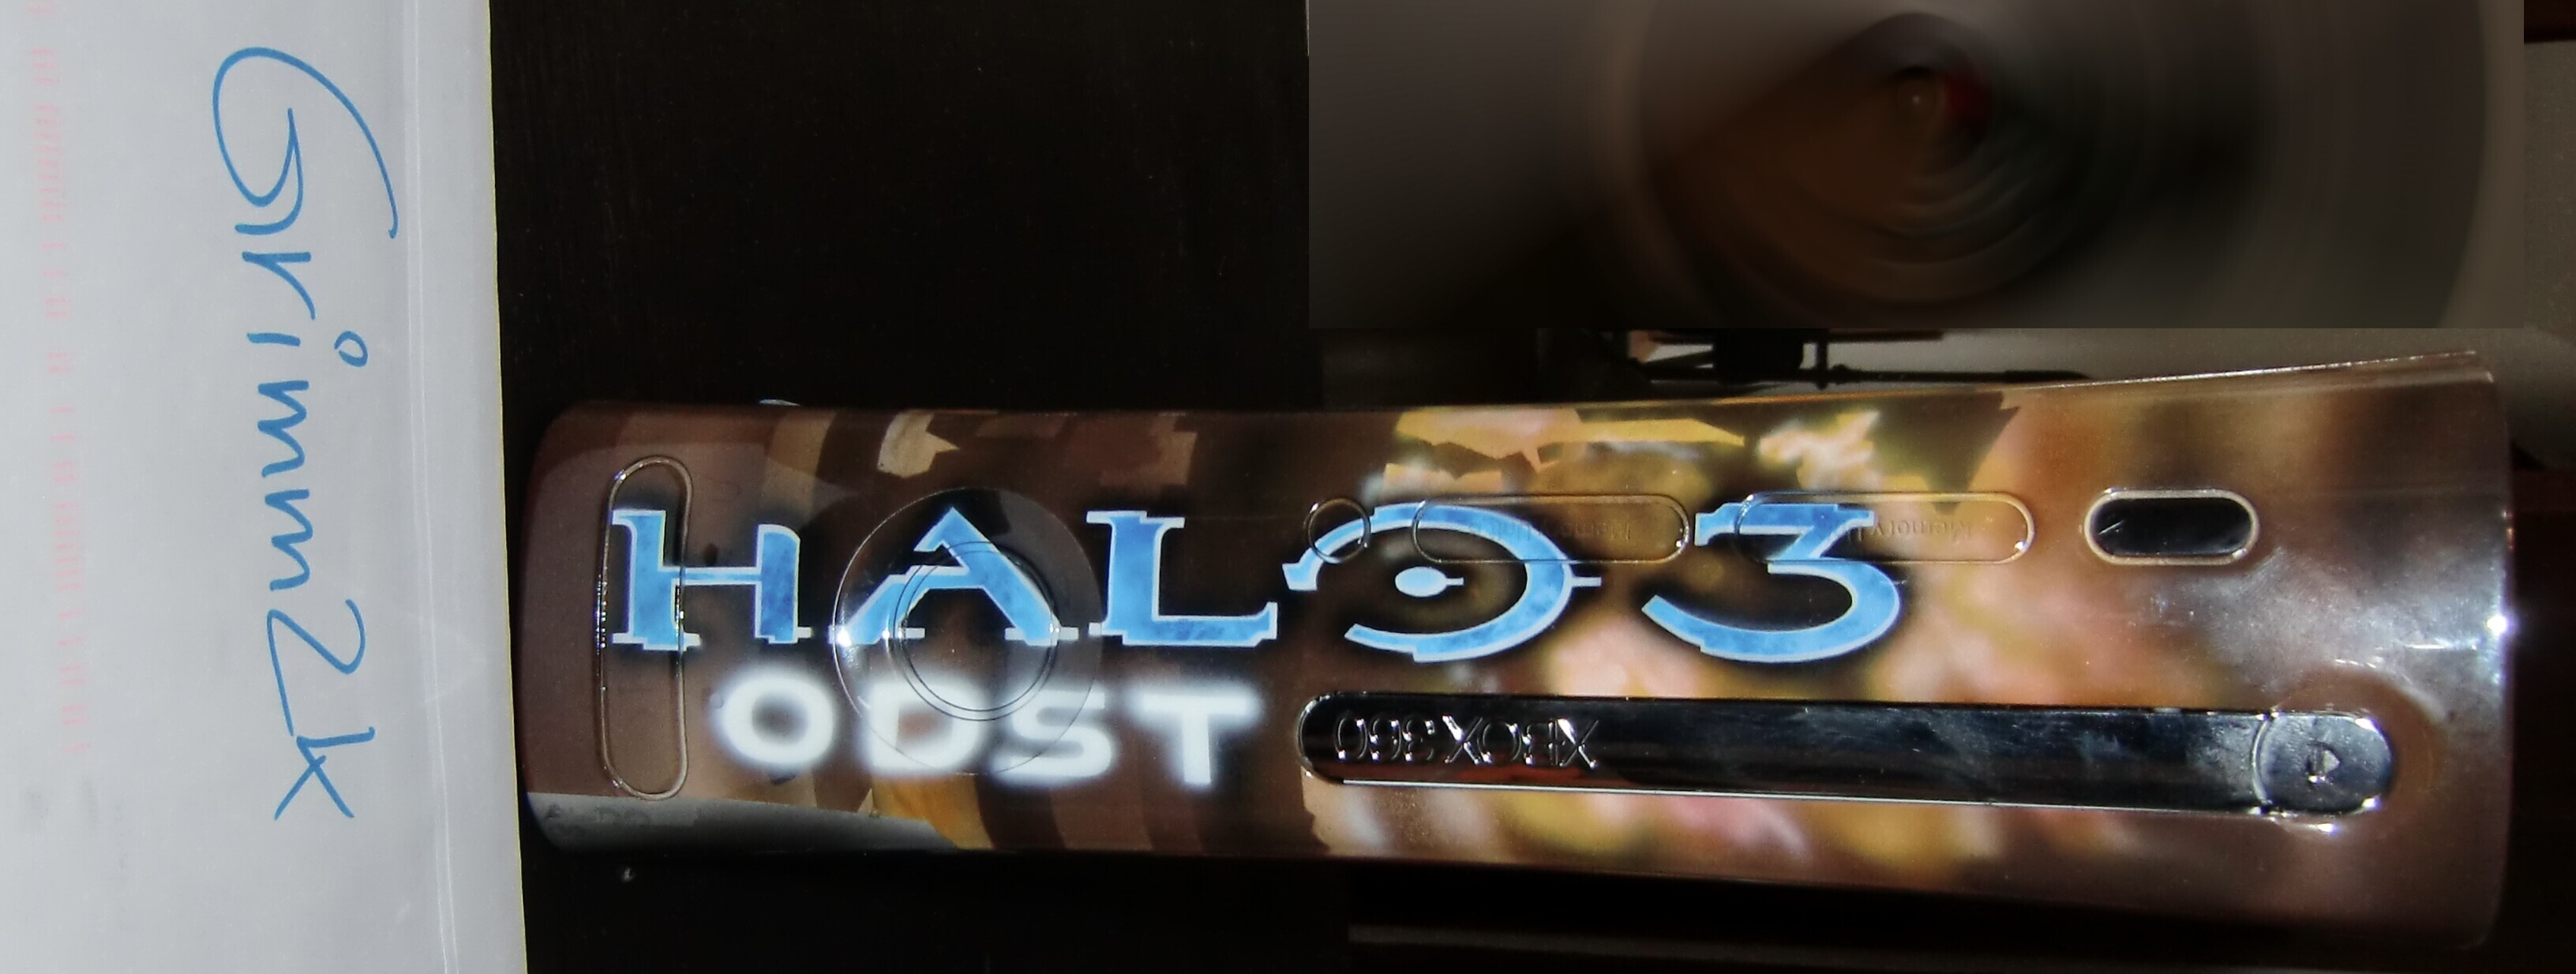  Microsoft Xbox 360 Halo 3 ODST Airbrush Console